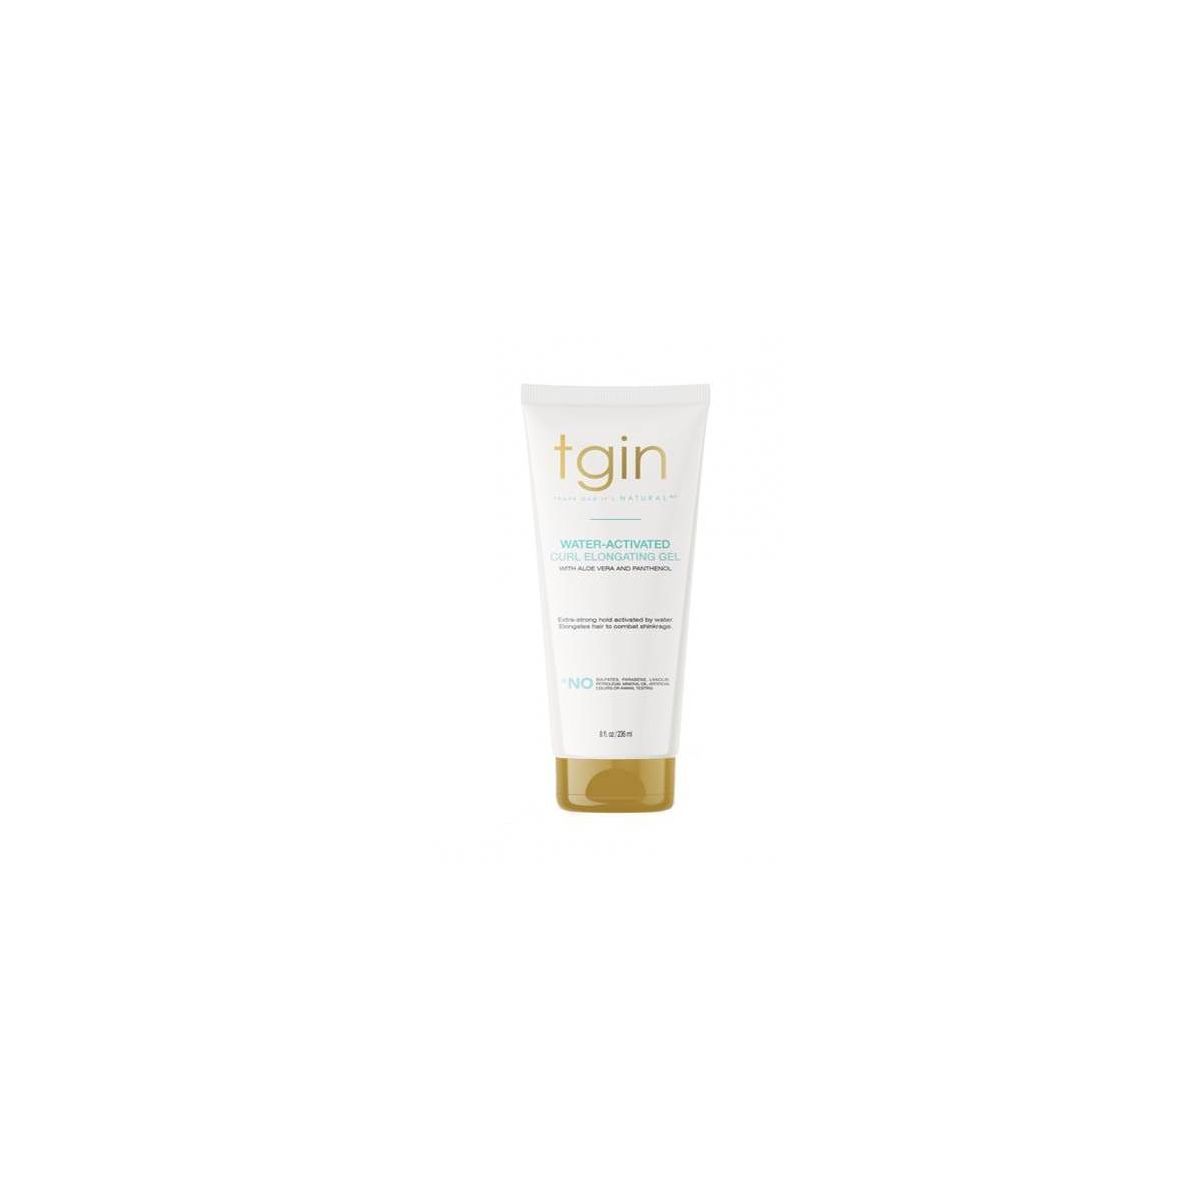 TGIN Water Activated Curl Elongating Hair Gel - 8 fl oz | Target